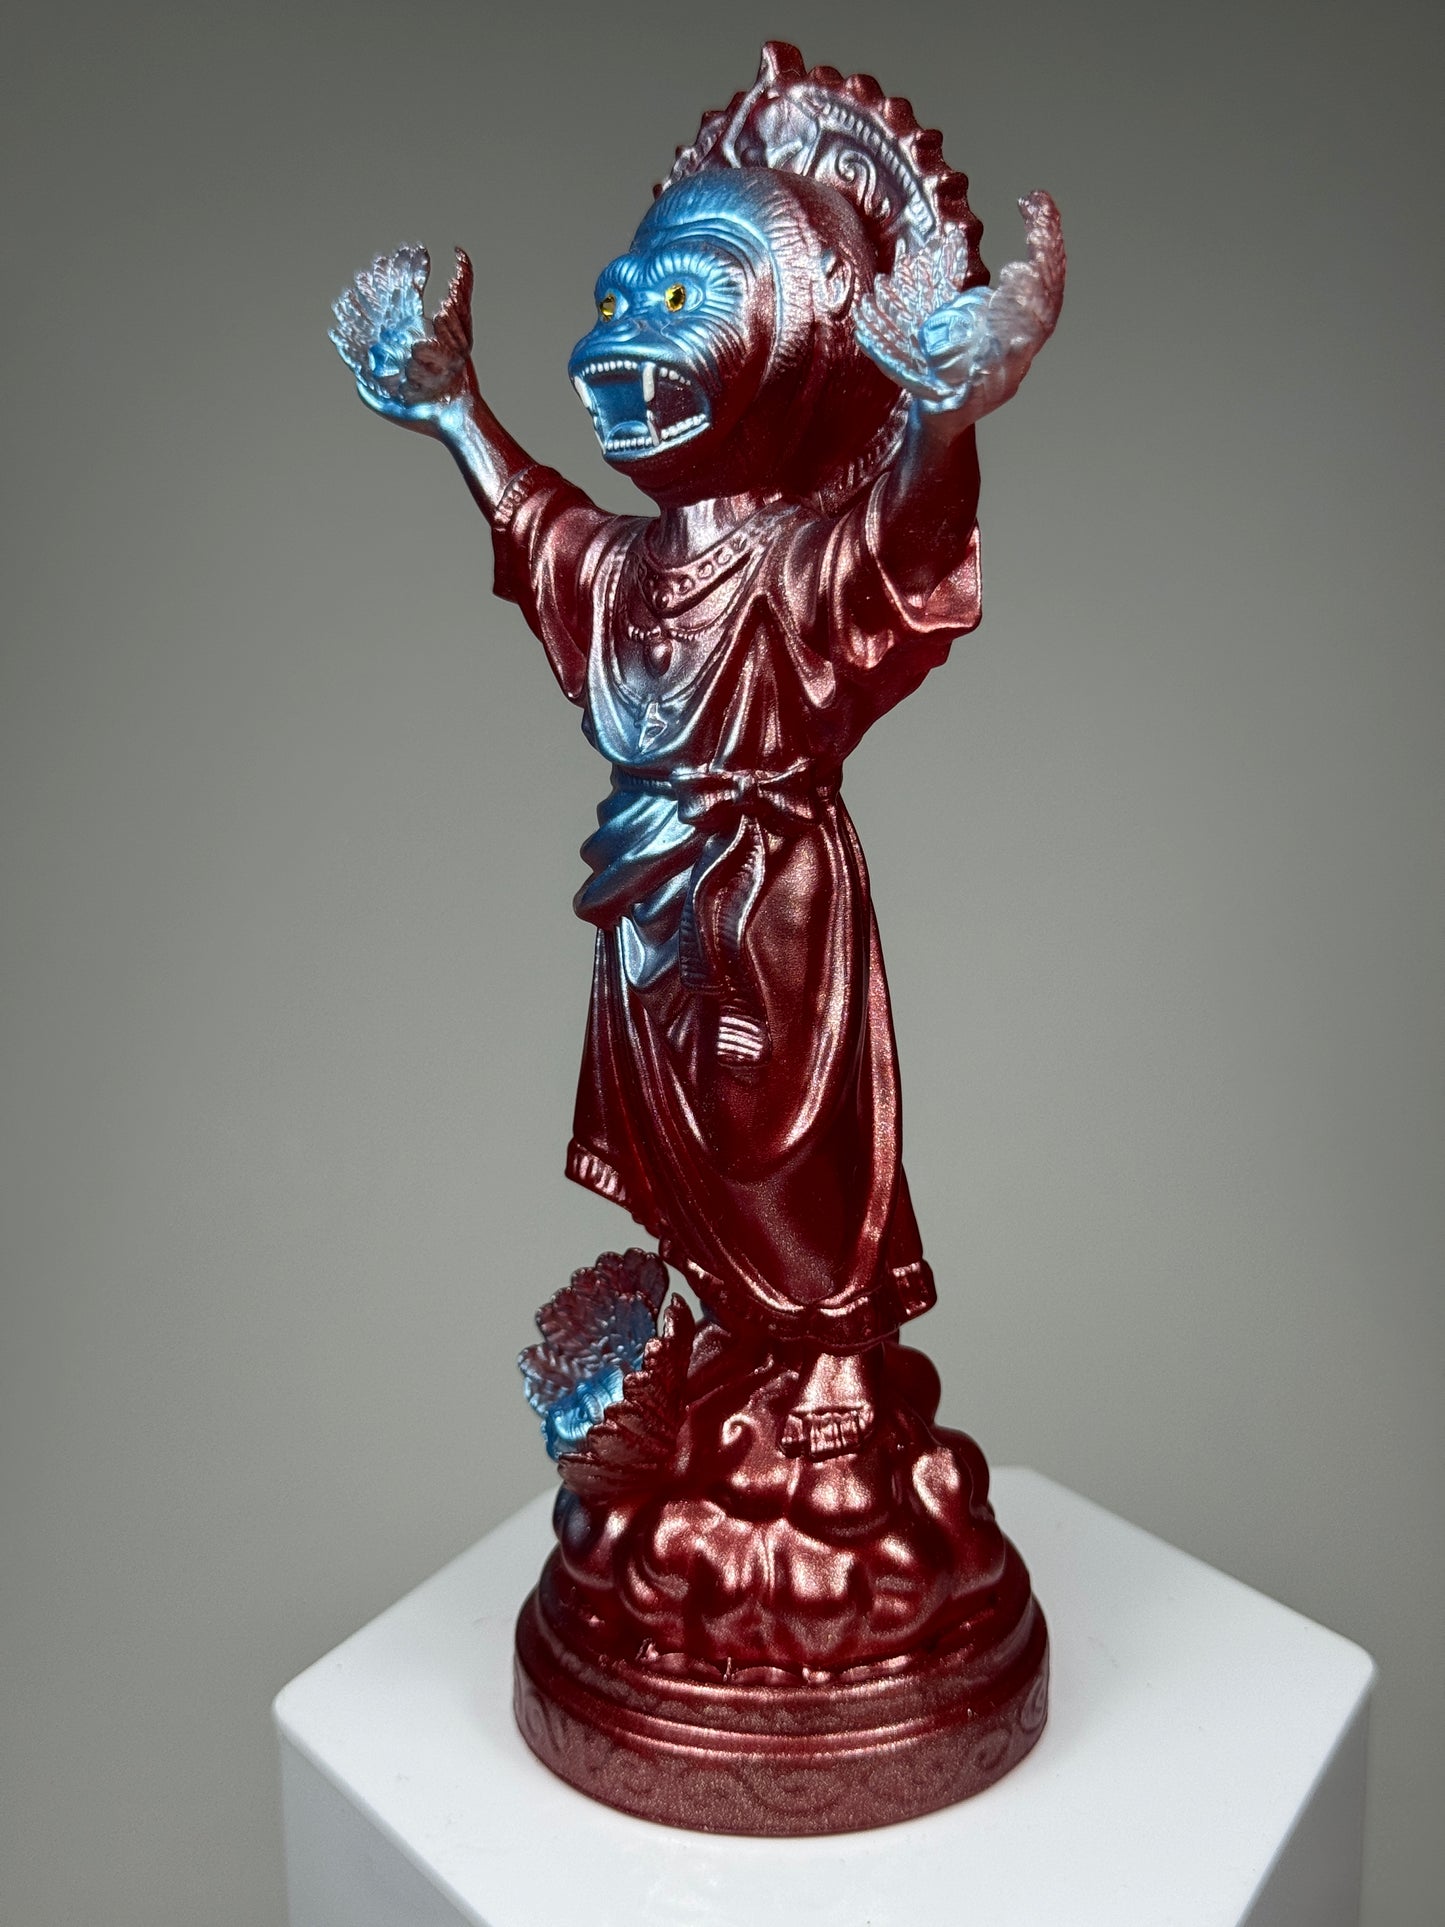 The Child Ape Jesus, Destroyer of Cherubs: Red and Blue Rage